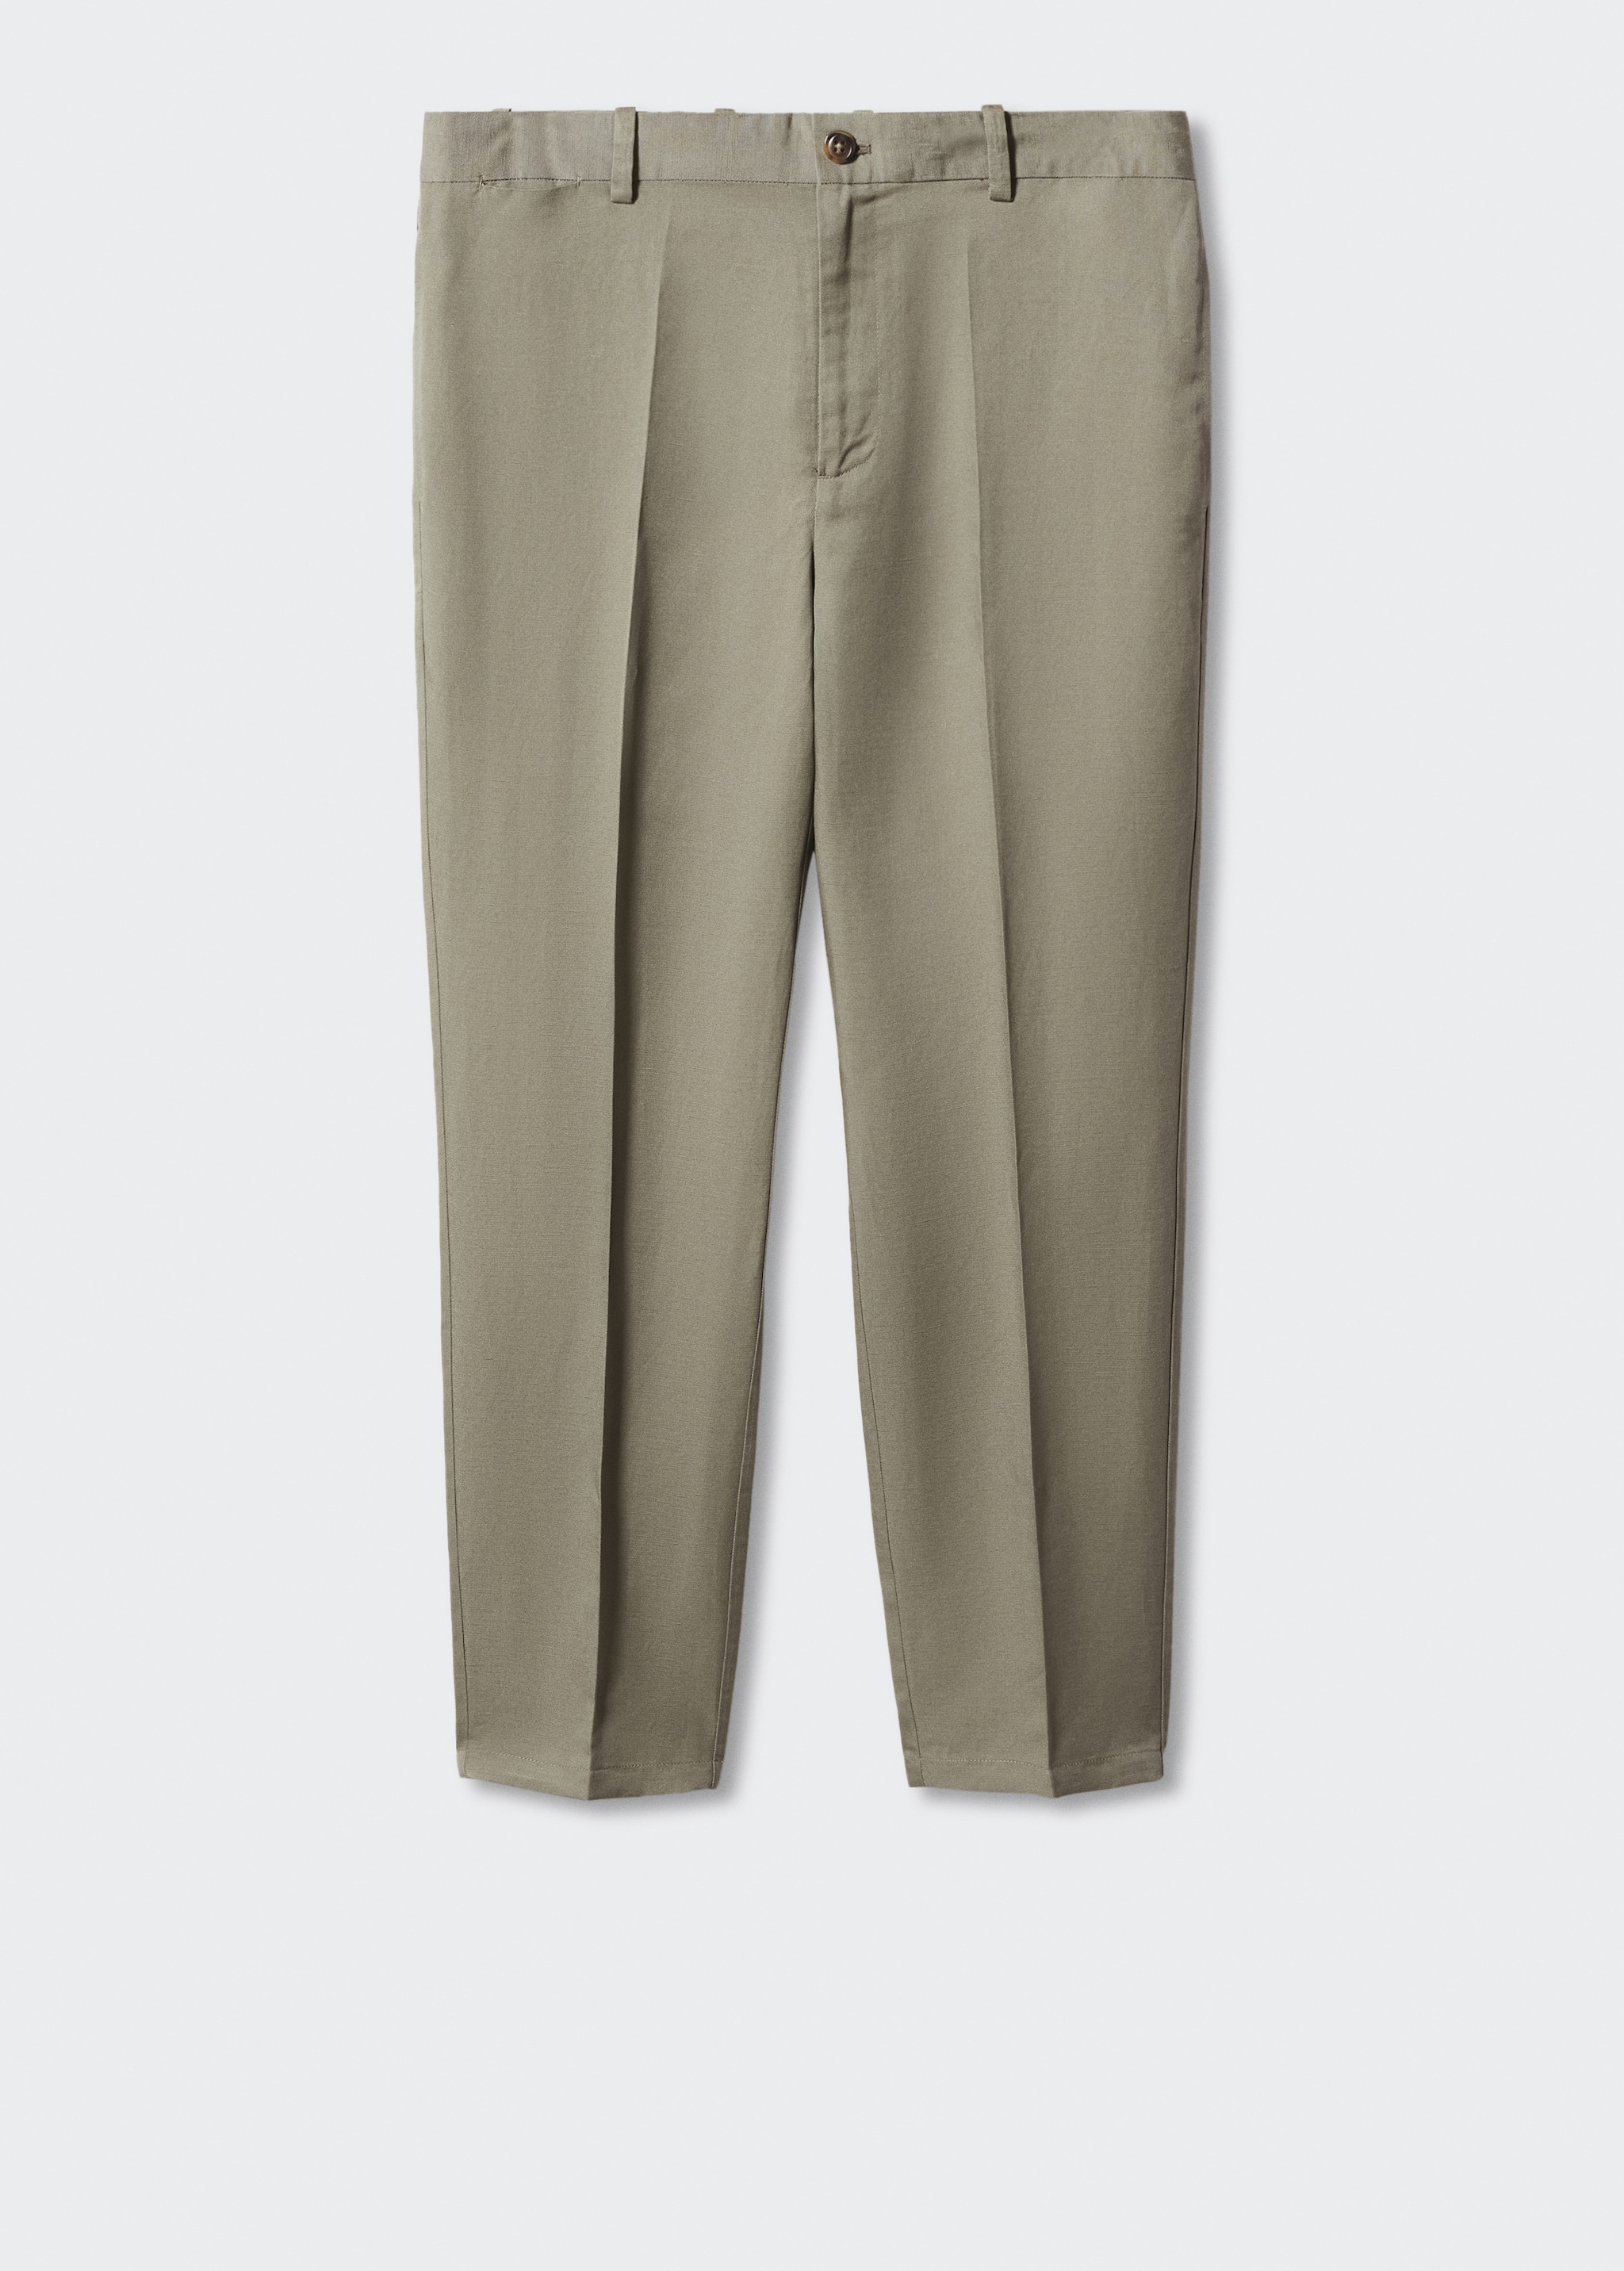 Pantalón slim fit lyocell lino  - Artículo sin modelo